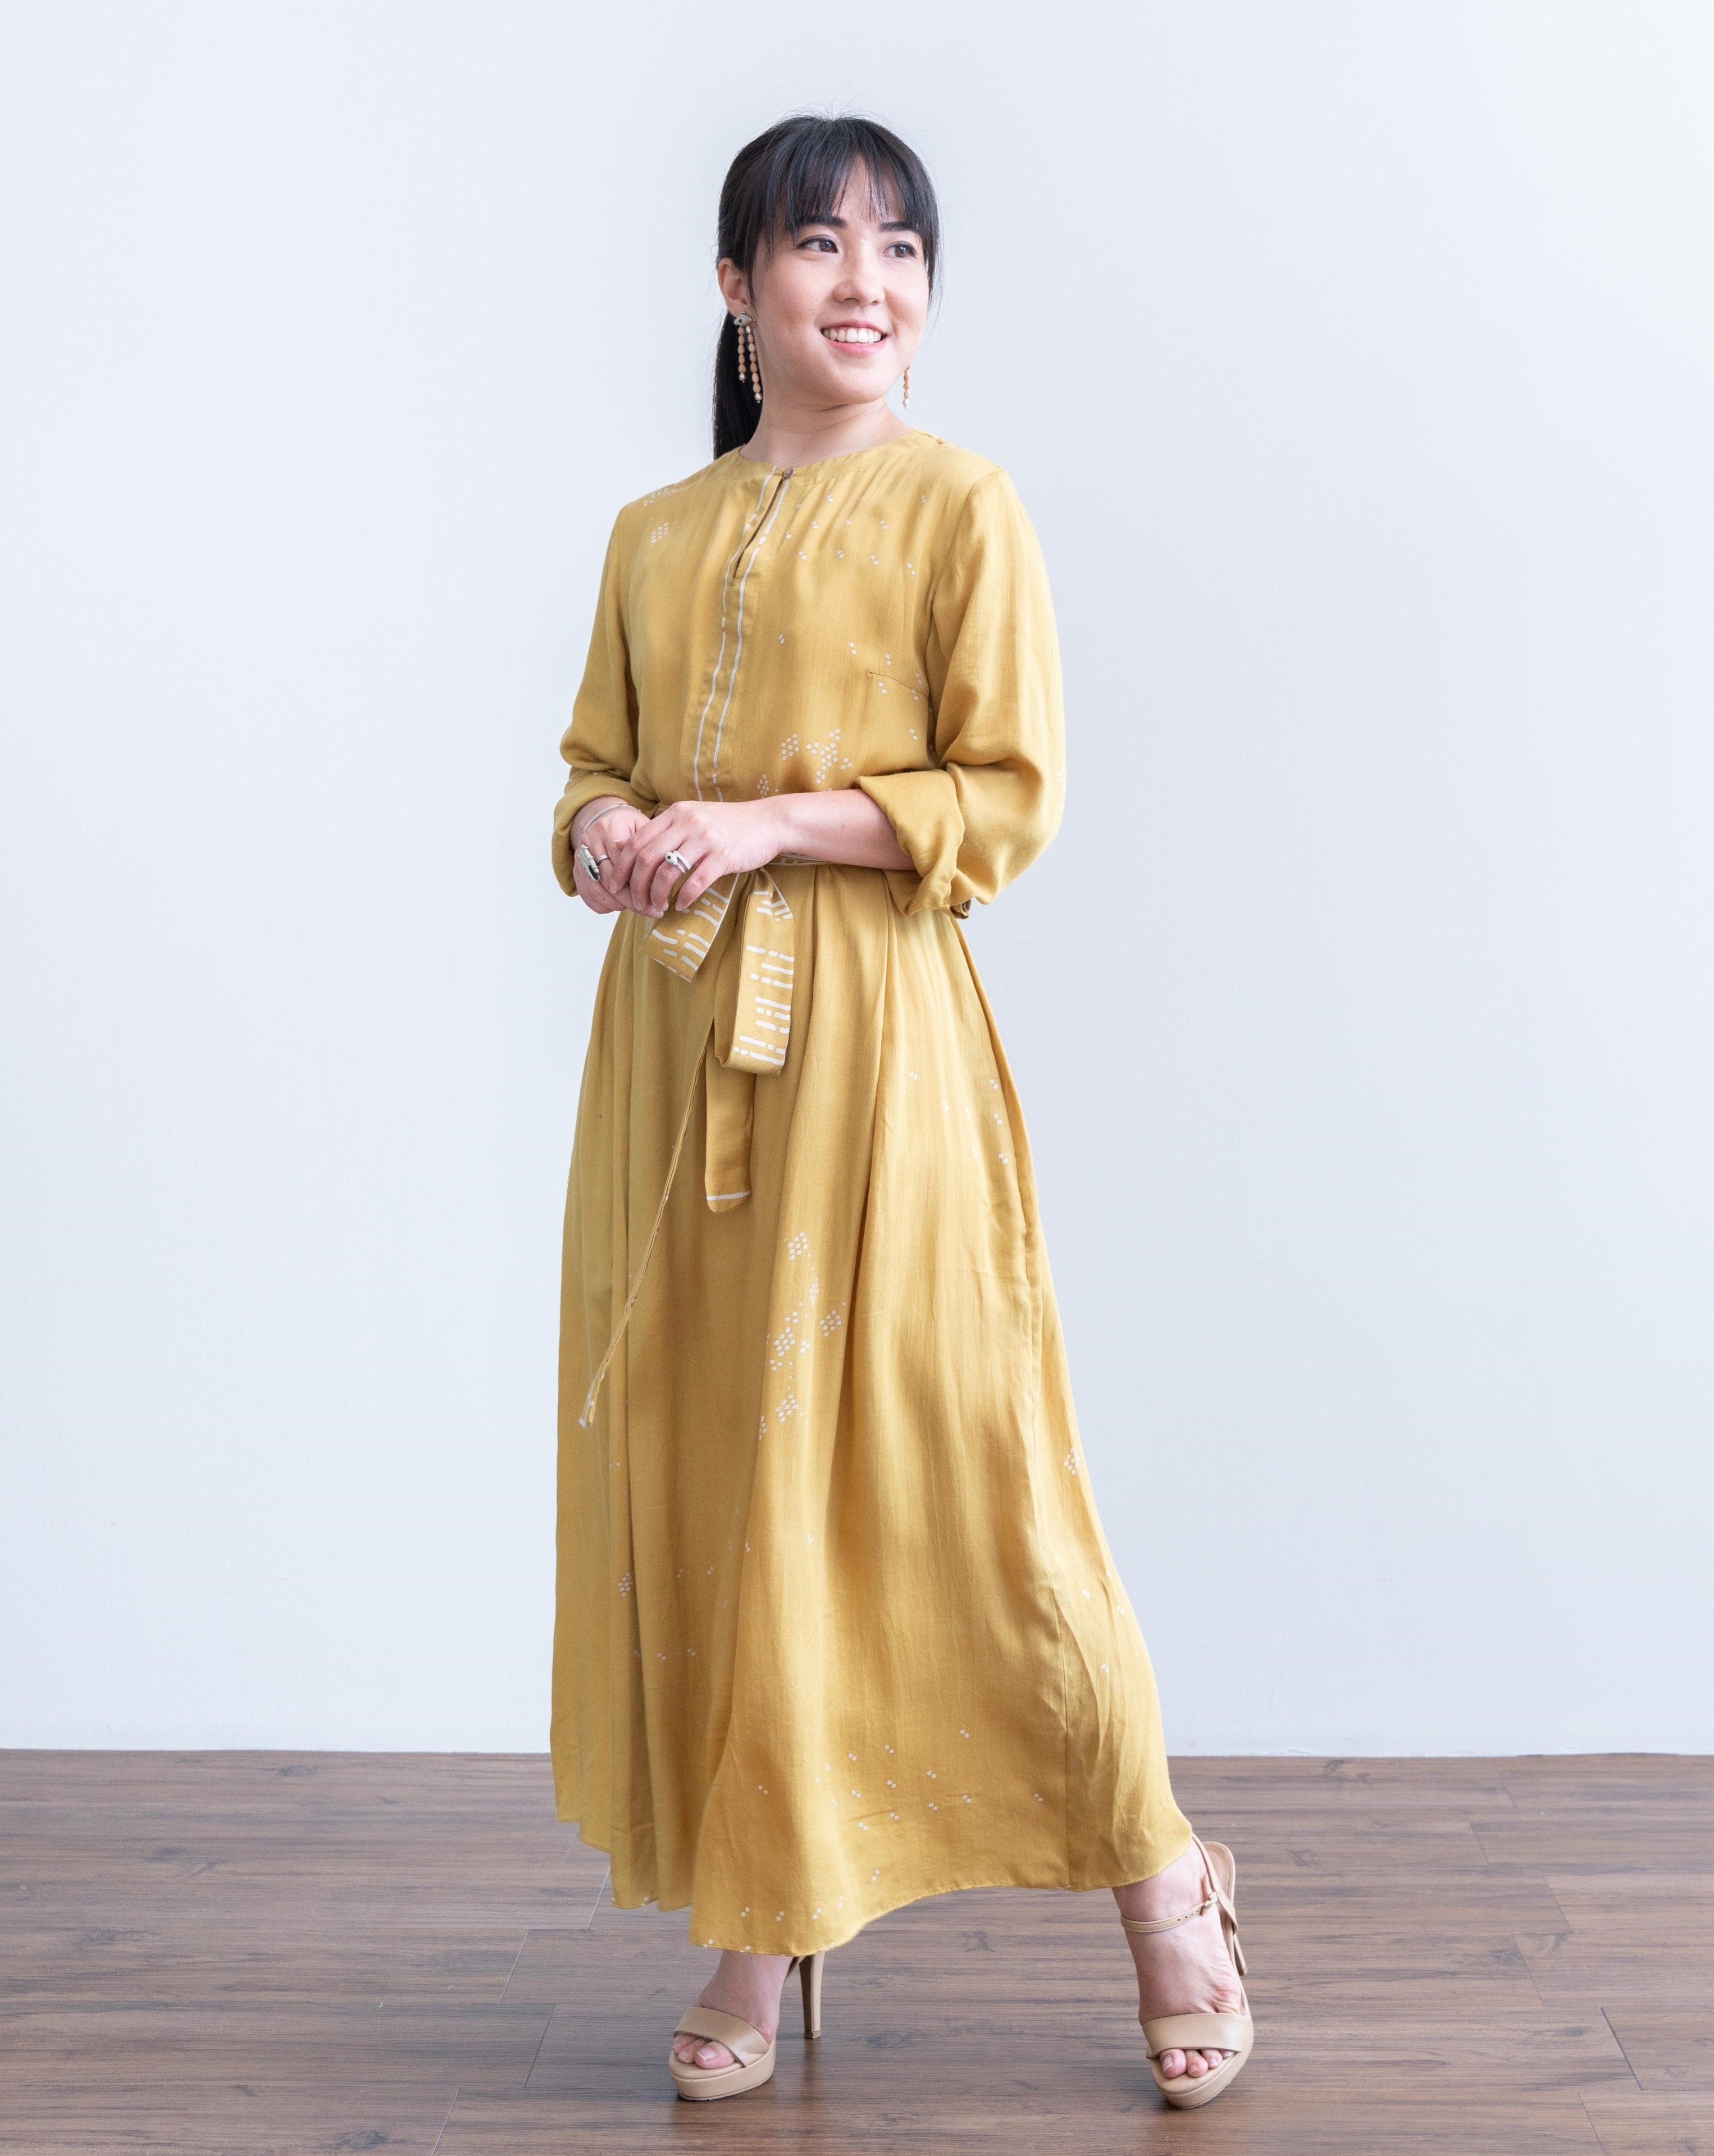 women's dress, dress with detachable belt, naturally dyed dress